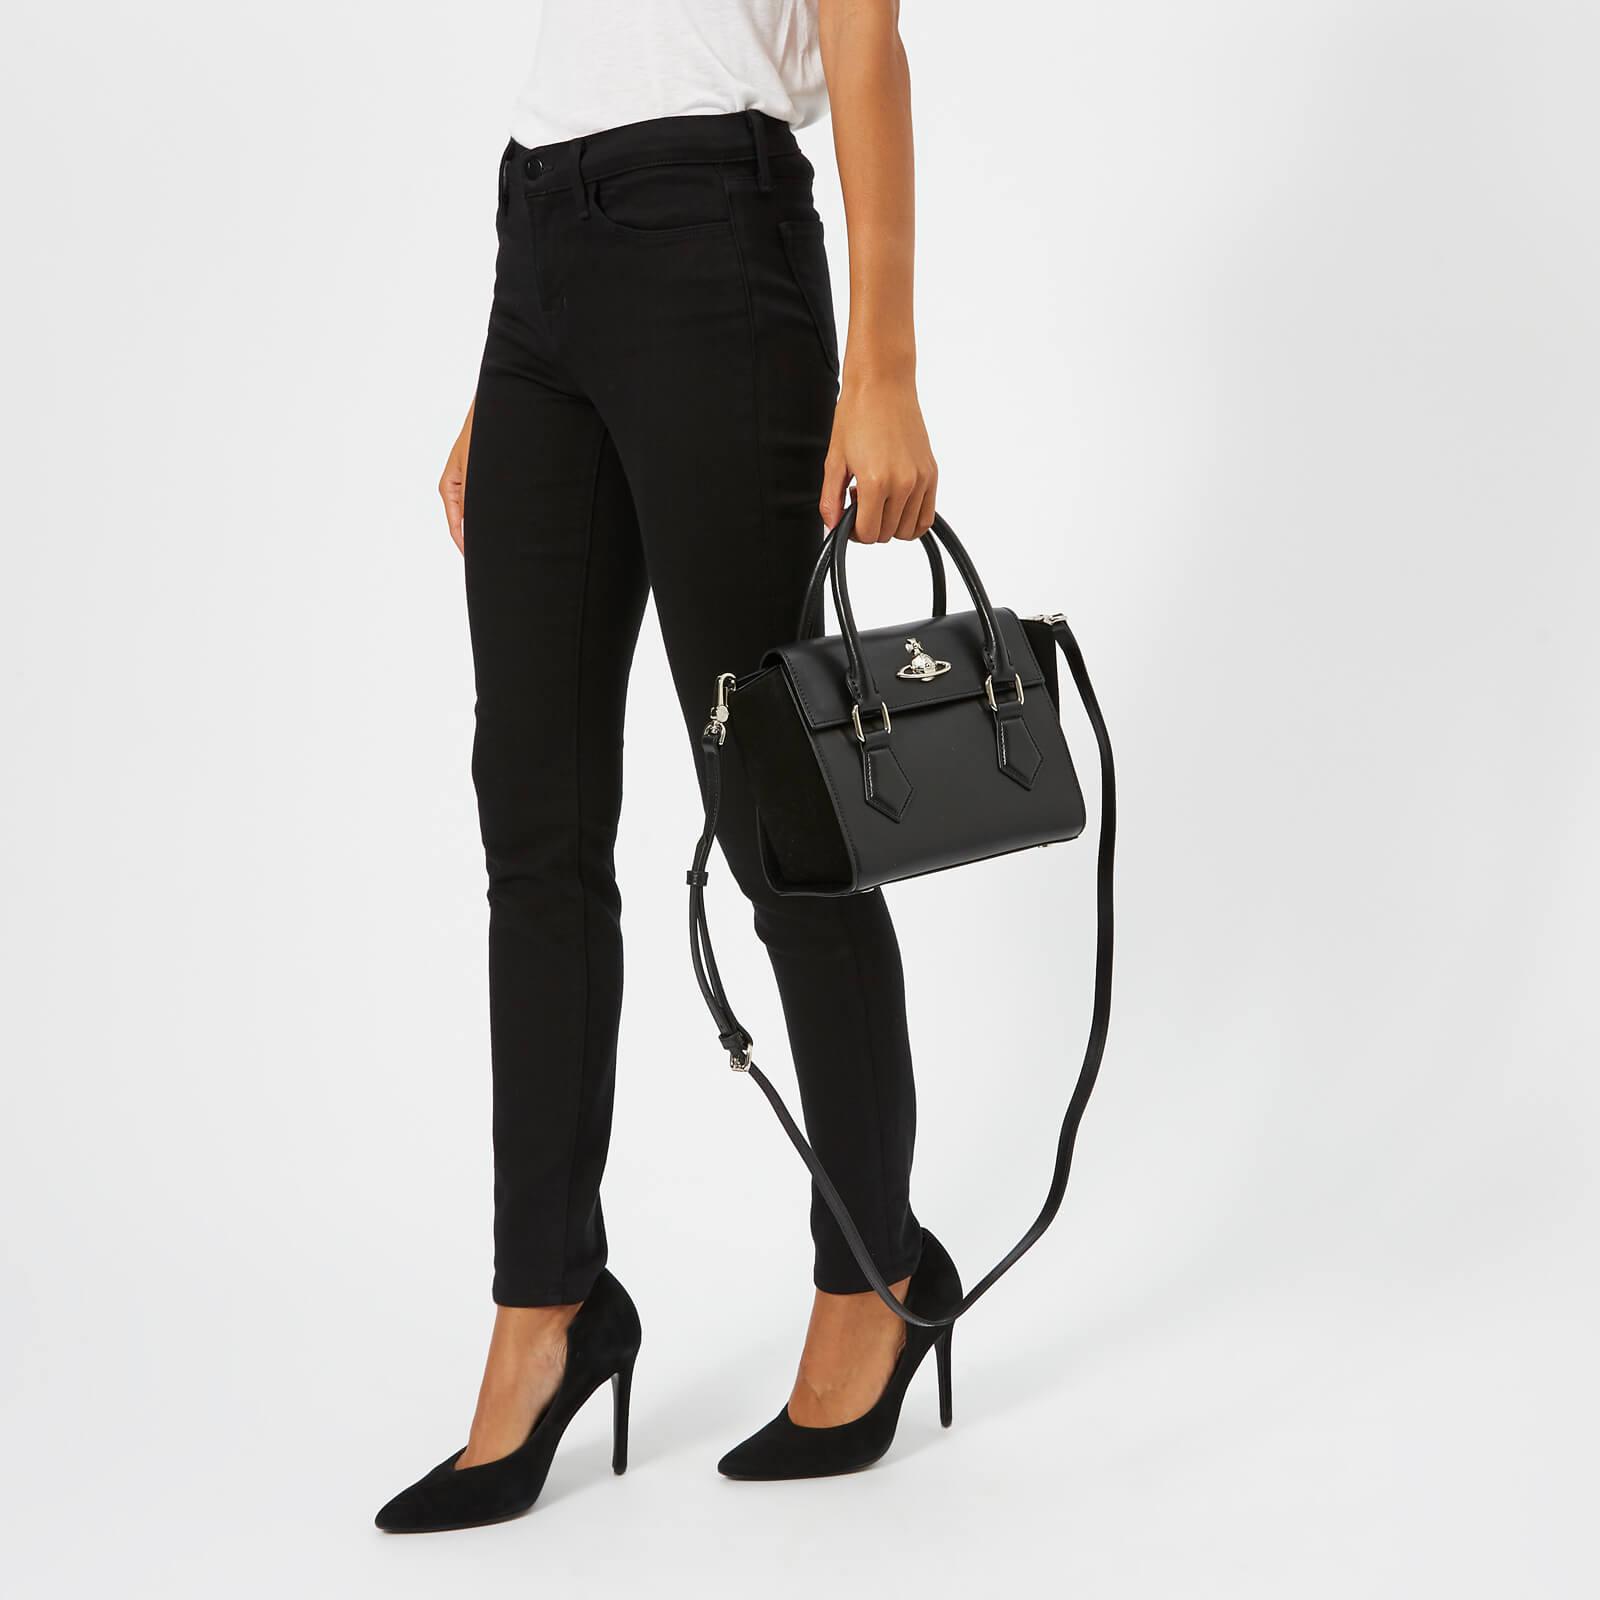 Vivienne Westwood Leather Matilda Small Handbag in Black - Lyst